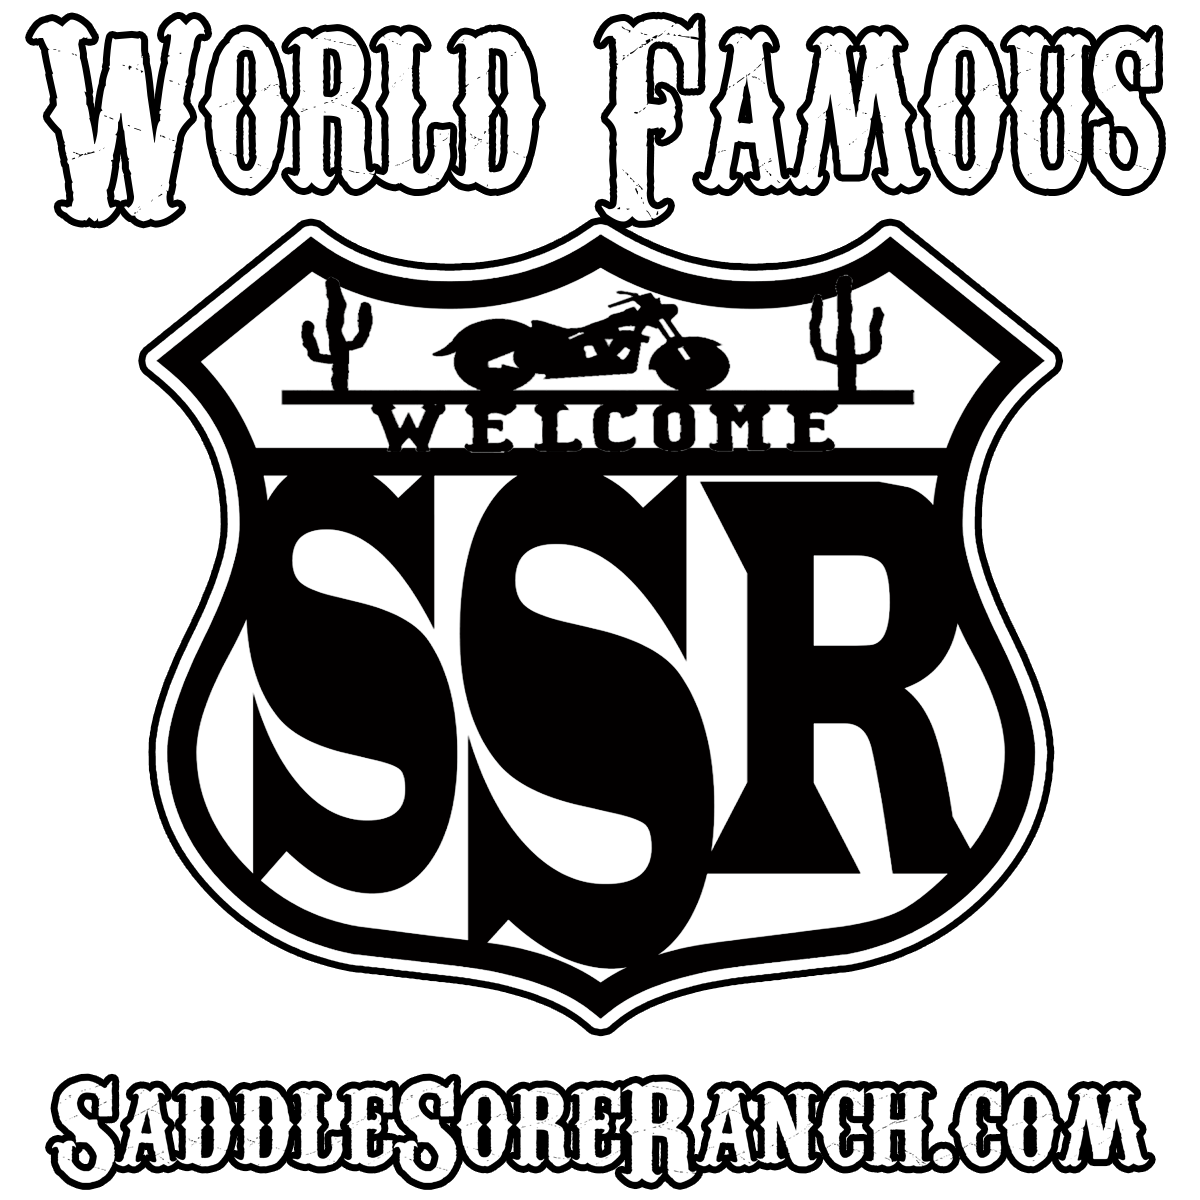 Roscoe's Chili Challenge thanks Saddle Sore Ranch